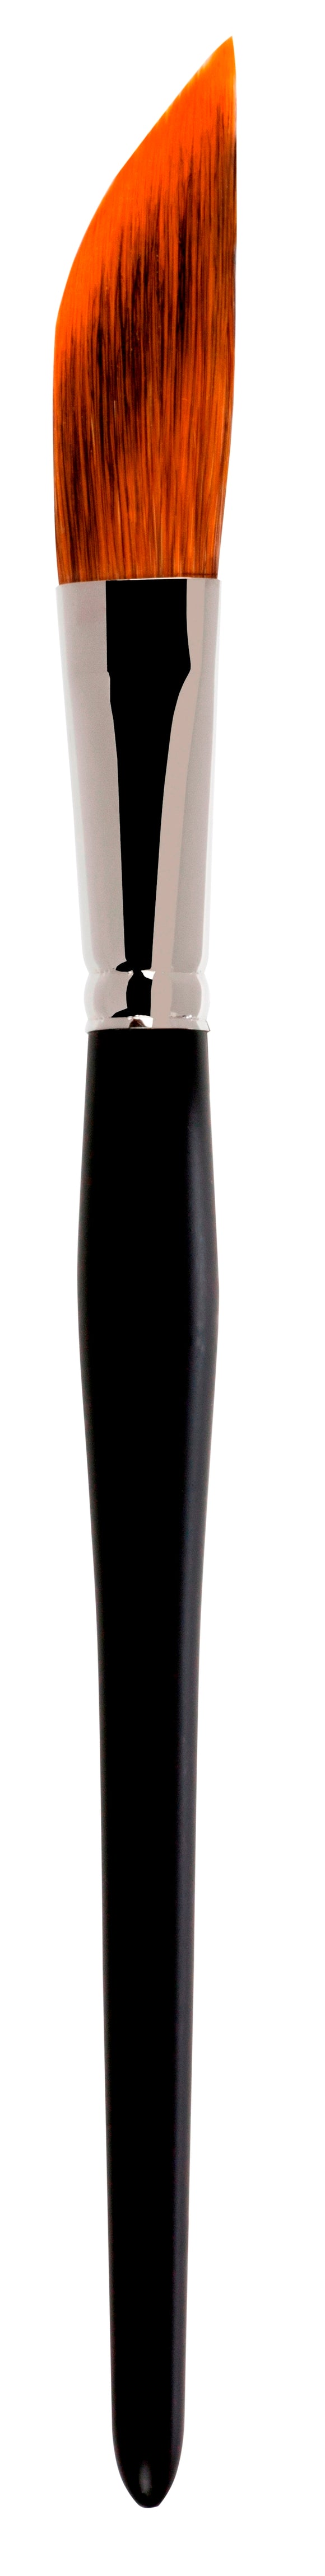 Zahn Dagger Striper Casin Synthetic-Squirrel Blend, 9289 Size 3/4